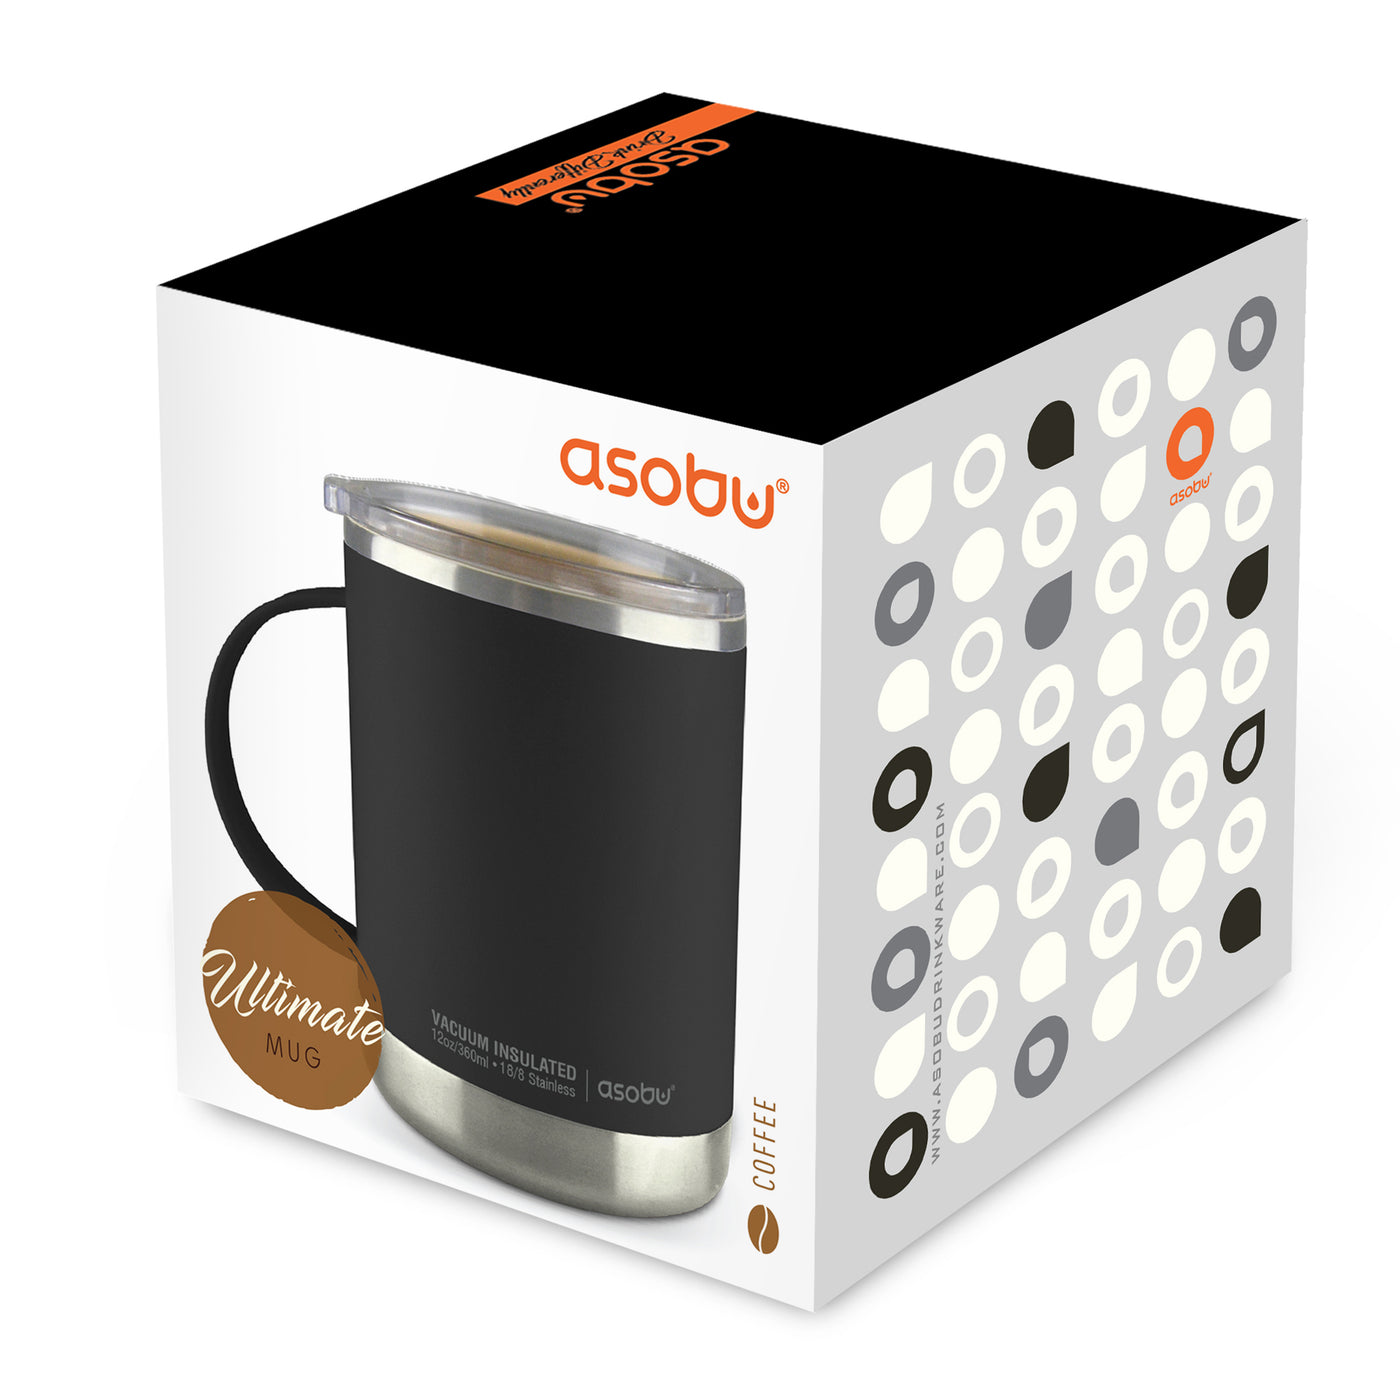 ASOBU NA-SM30BK The Fabulous Coffee Mug (Black) 